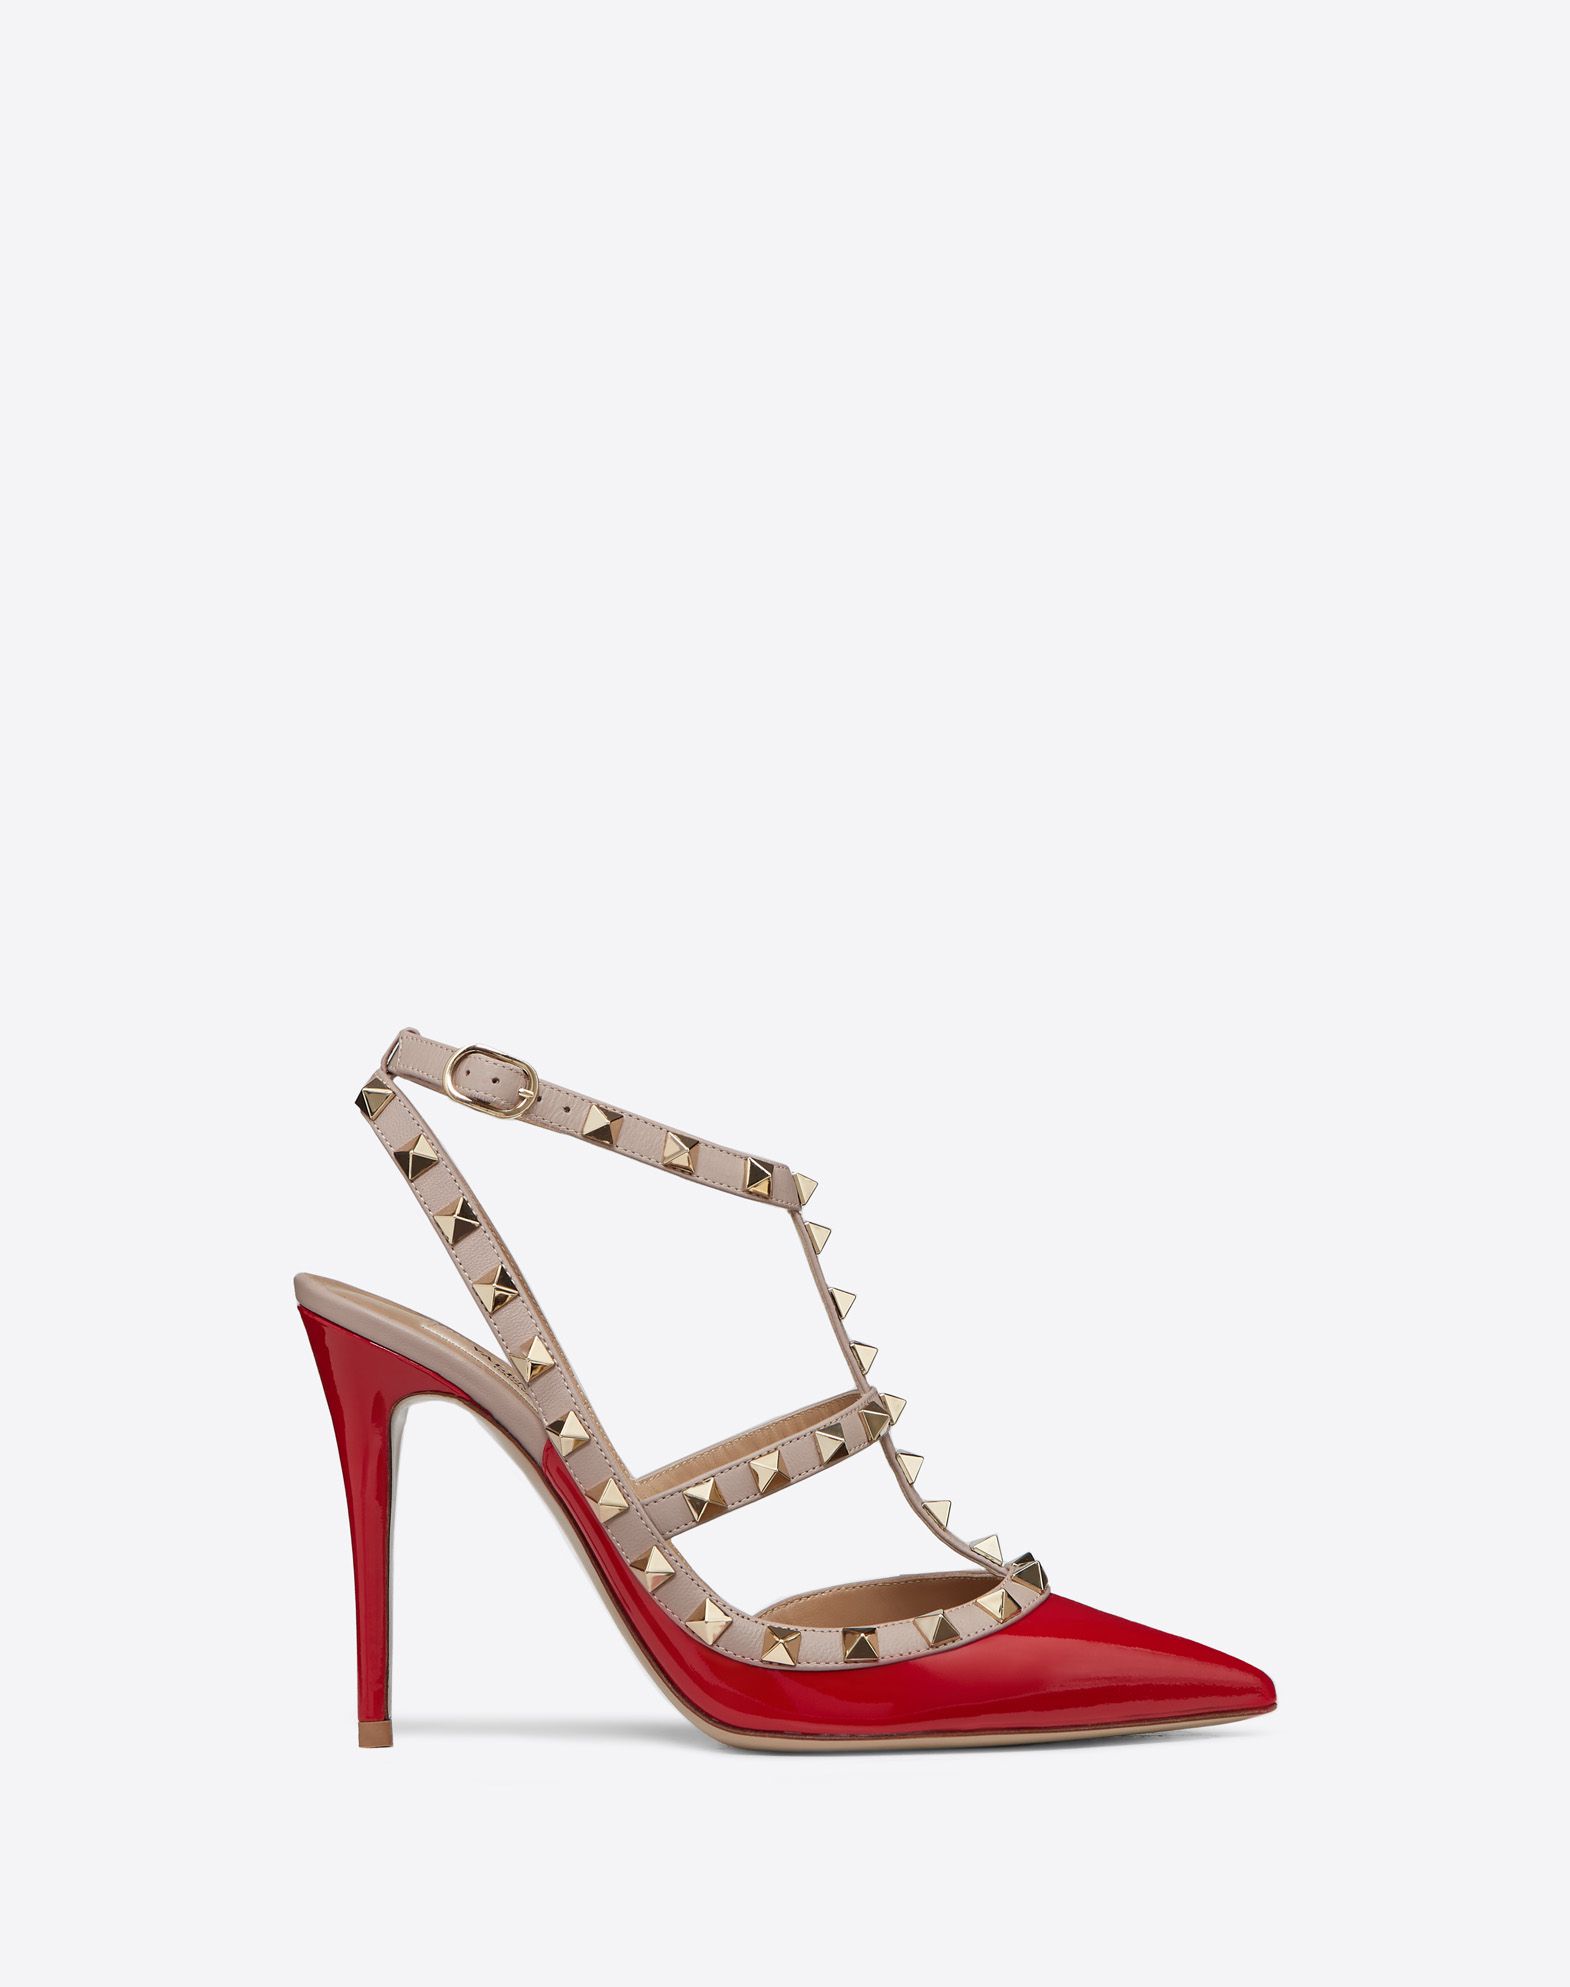 valentino red heels